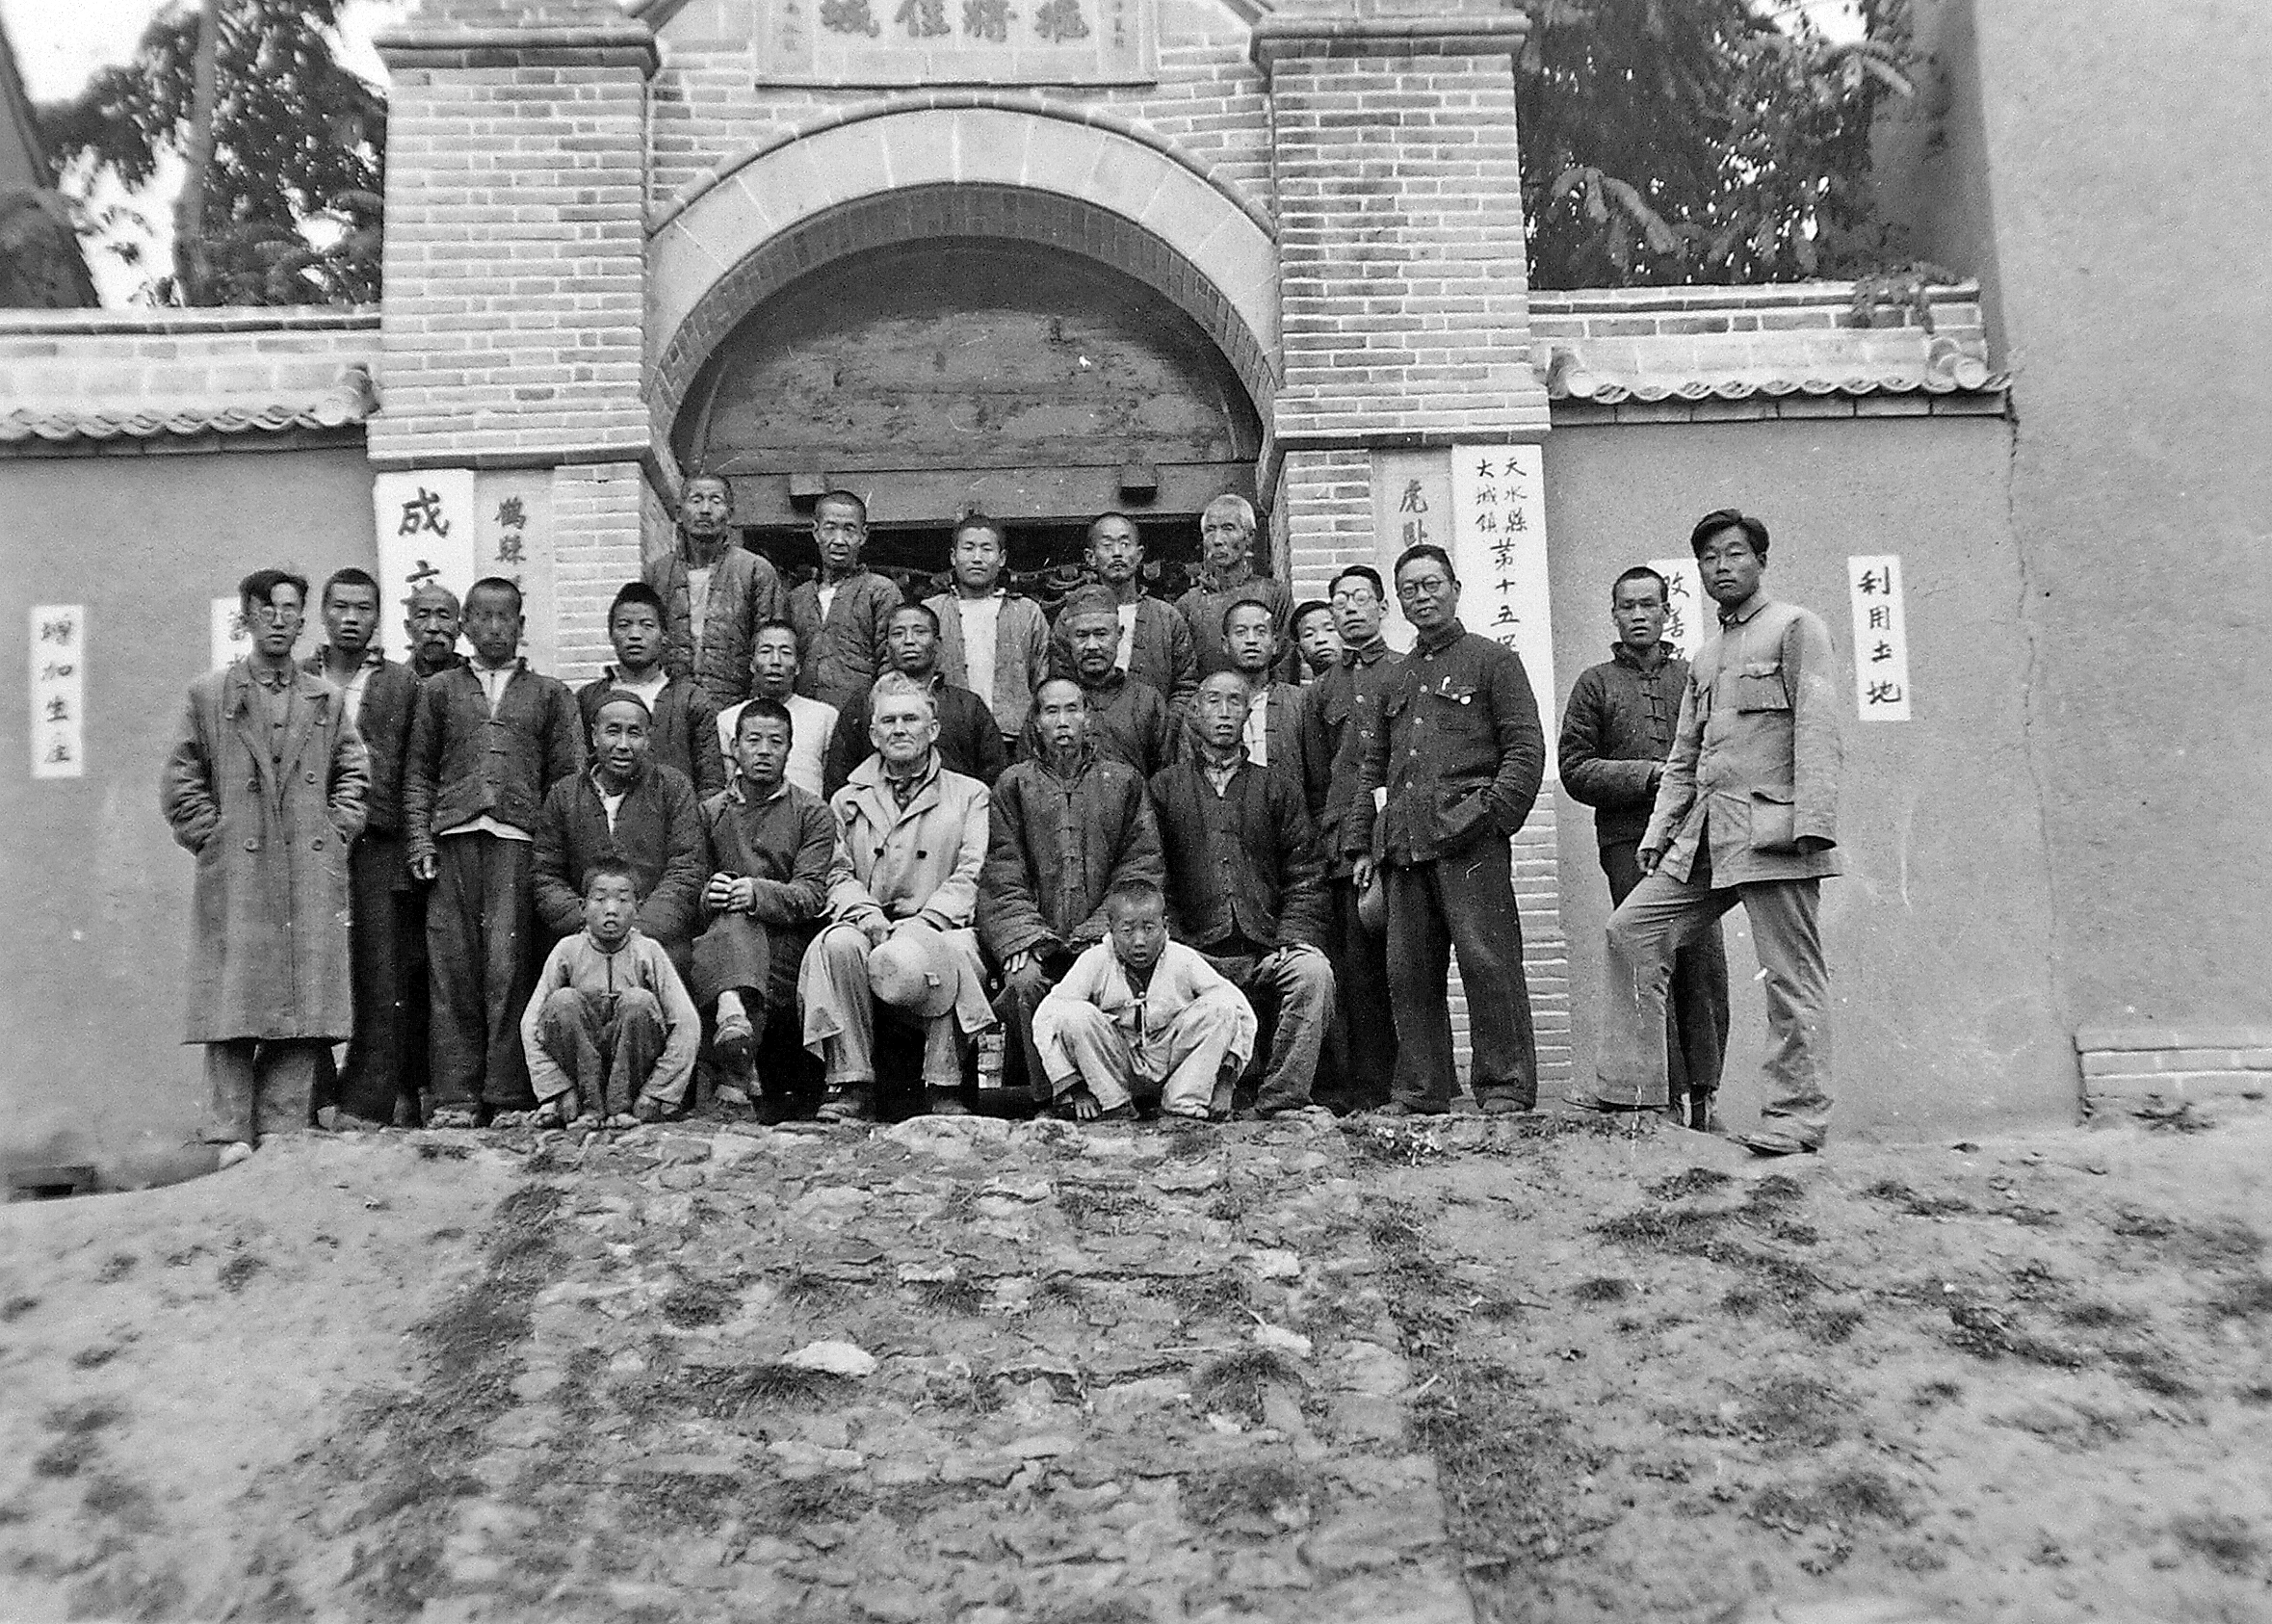 Walter C. Lowdermilk images from Tianshui, Gansu